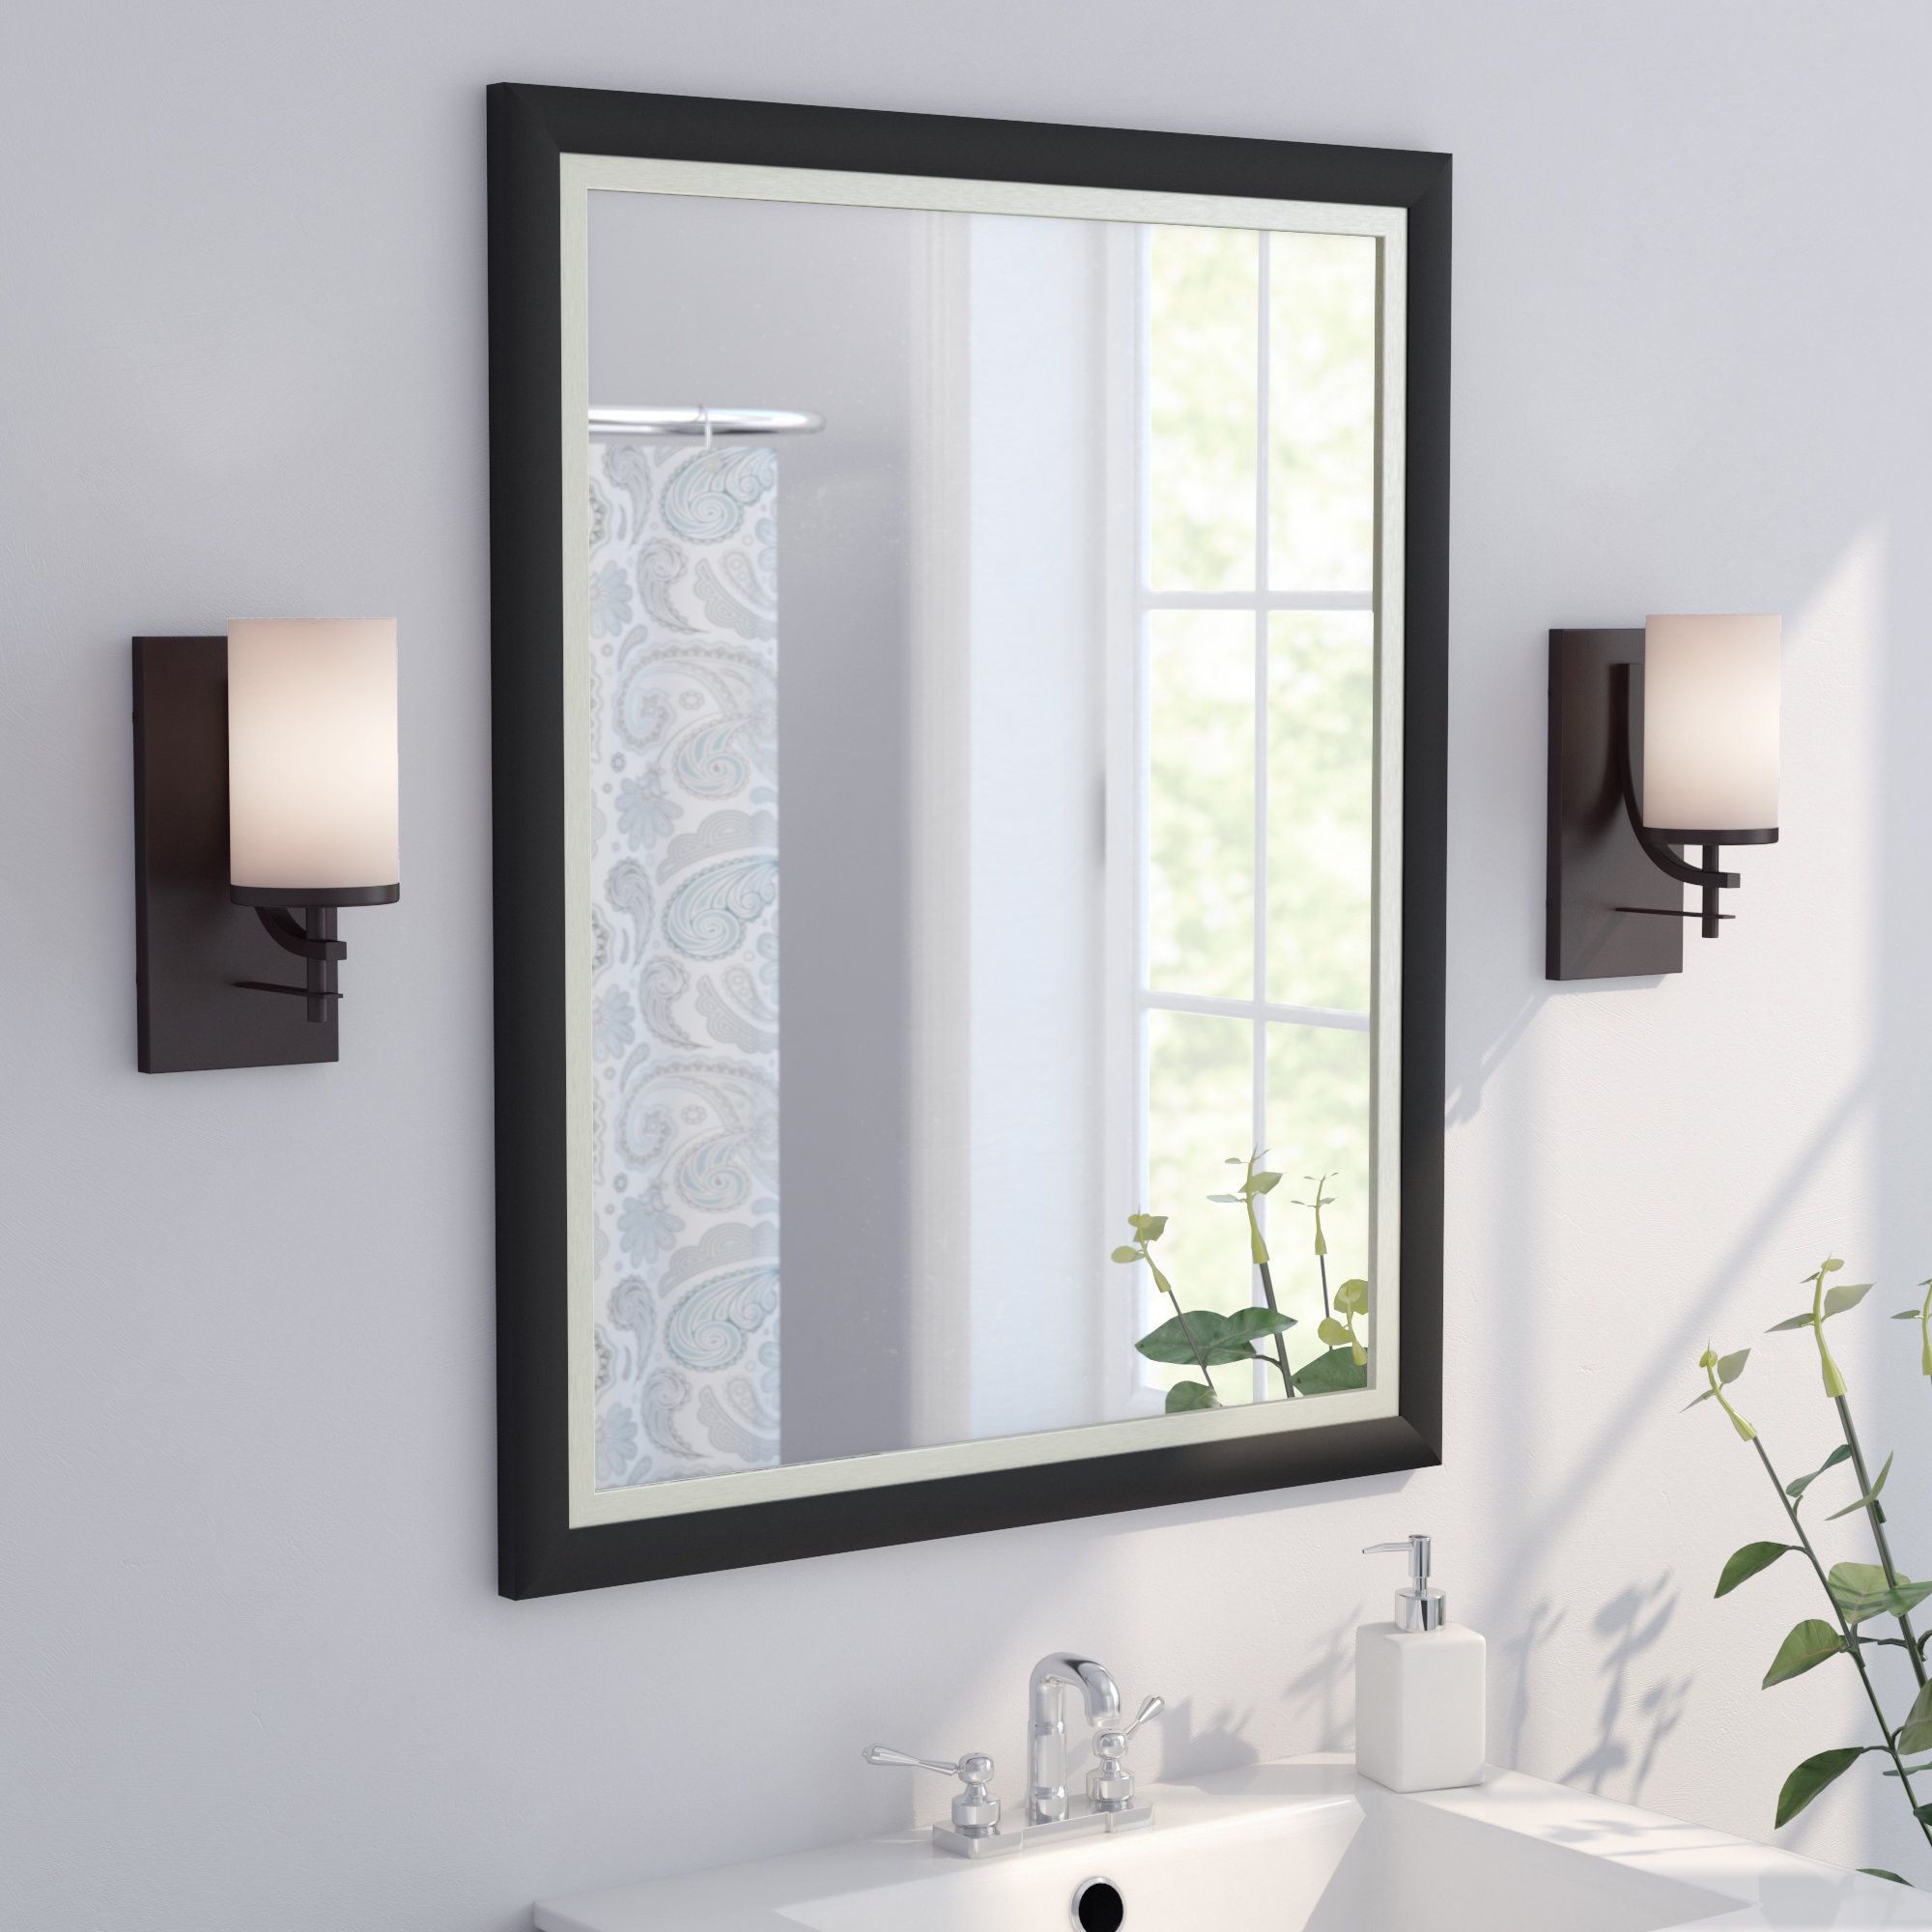 Carollo Framed Wall Mirror In Newest Framing Bathroom Wall Mirrors (View 18 of 20)